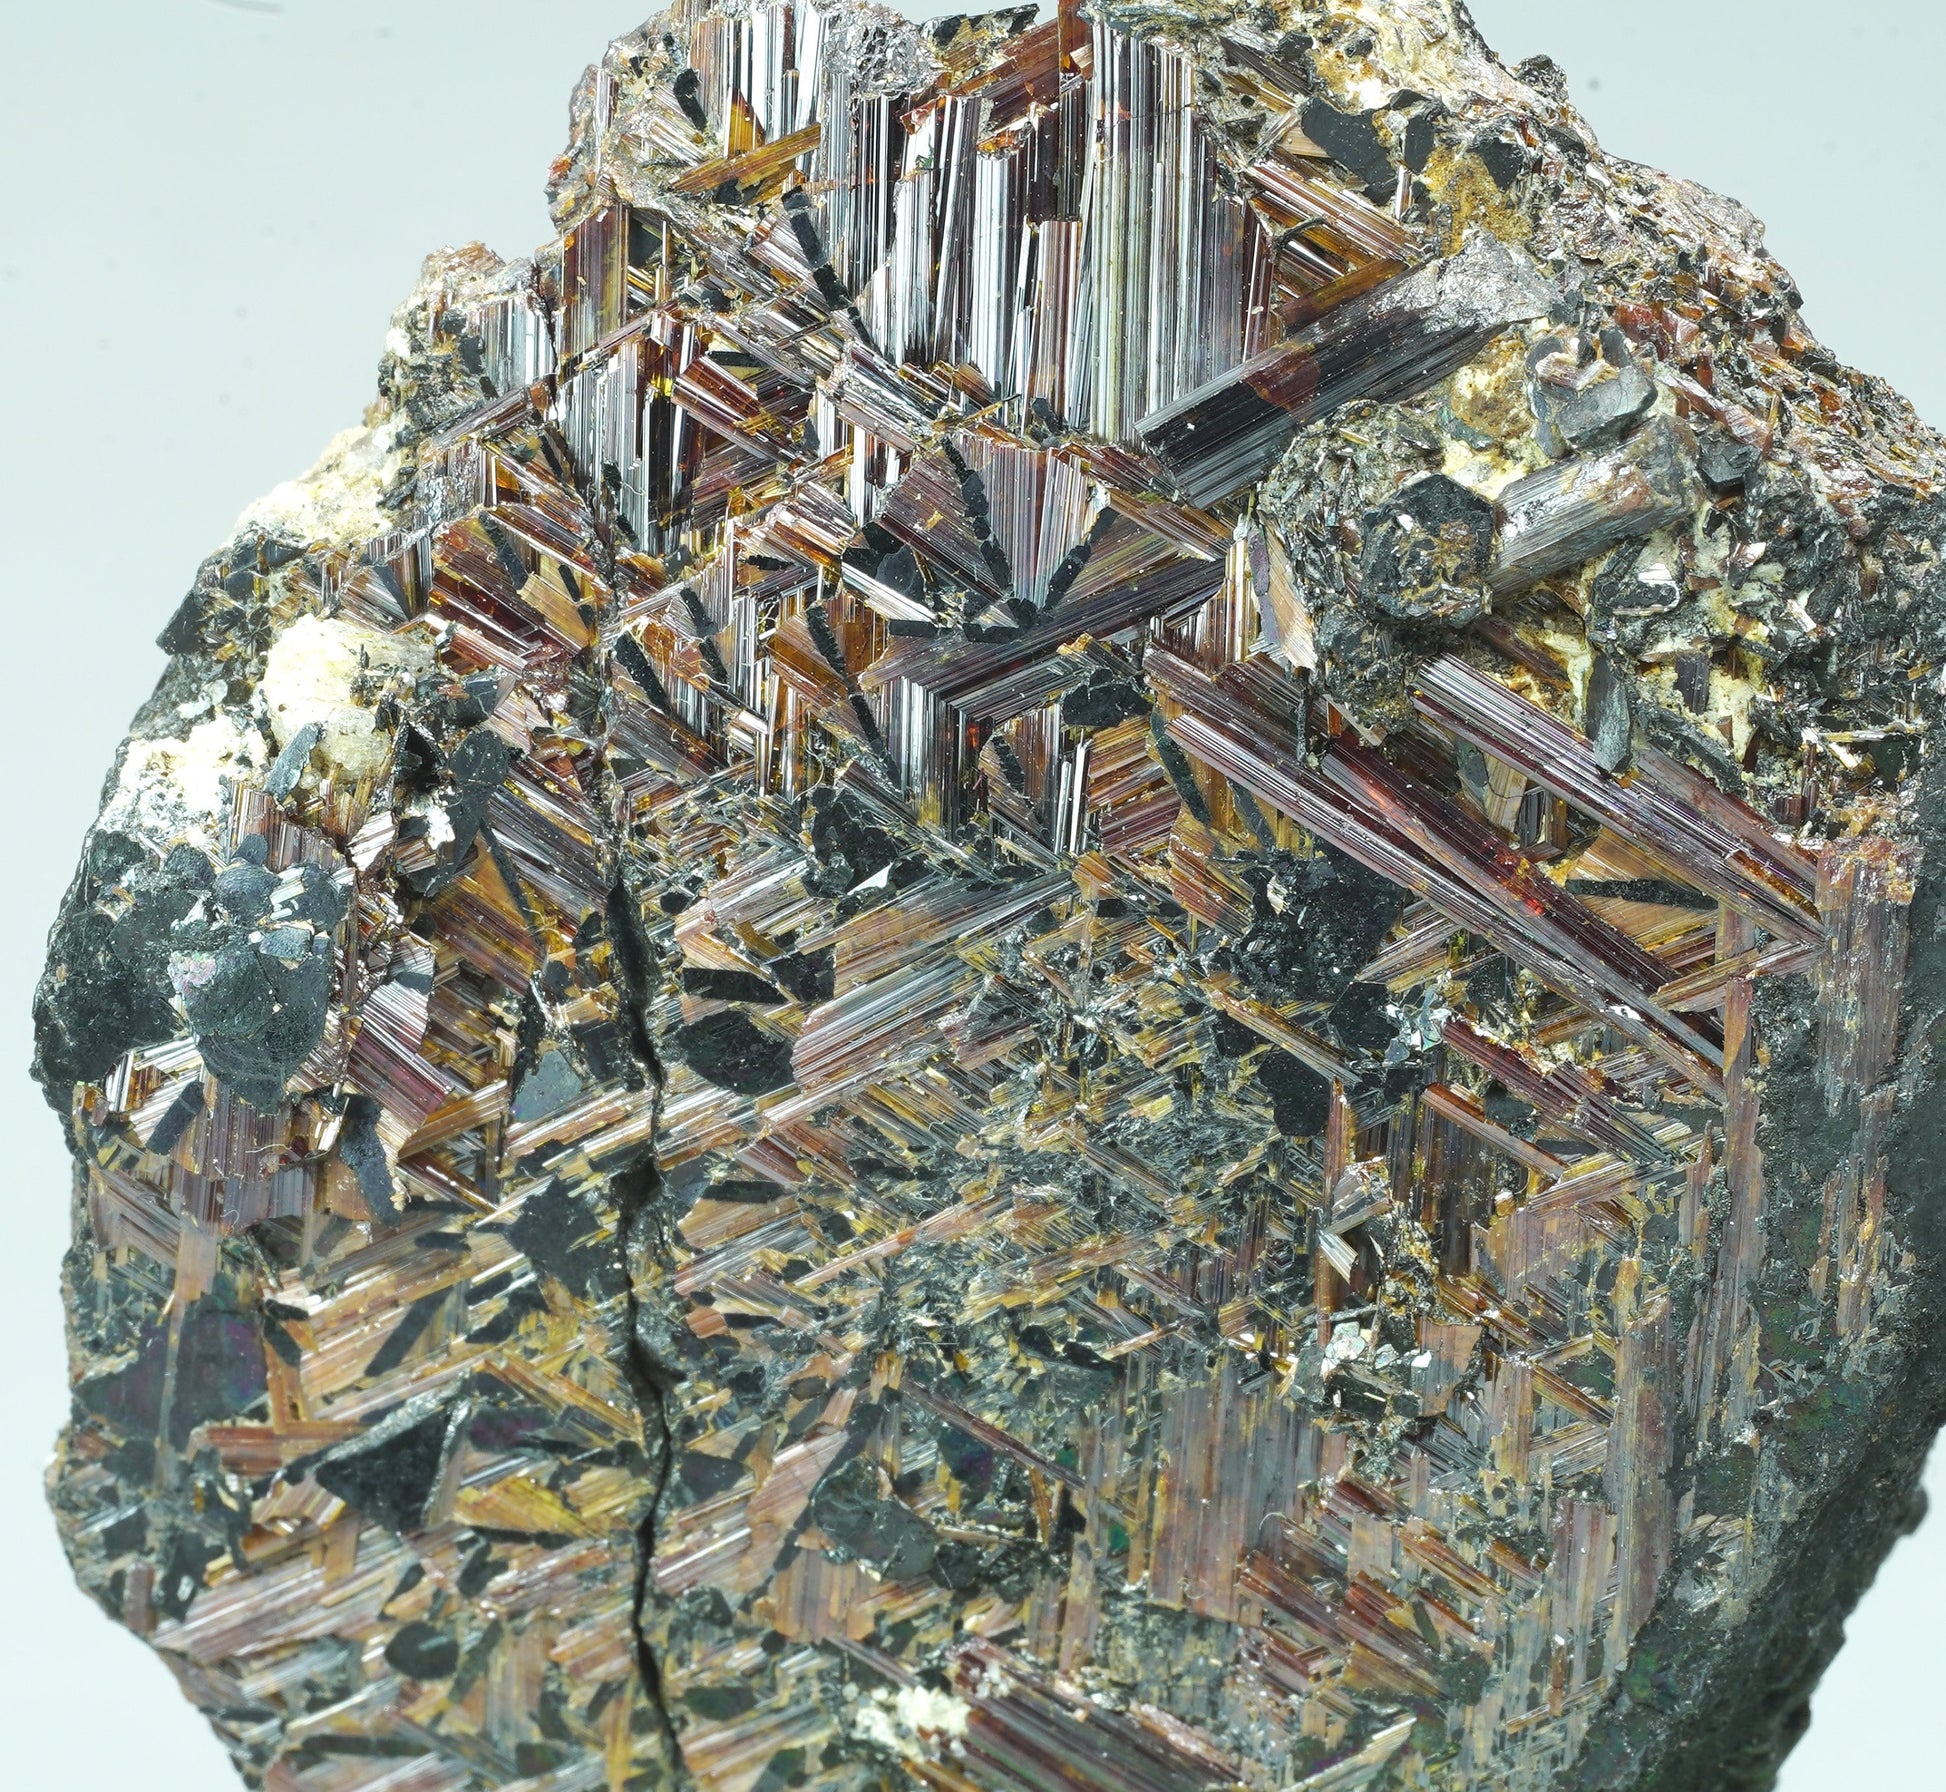 ARSAA GEMS AND MINERALS1x repaired Rutile var Sagenite on hamatite beautiful crystal from Zagi mountain KP Pakistan, 41.9 grams - Premium  from ARSAA GEMS AND MINERALS - Just $75.00! Shop now at ARSAA GEMS AND MINERALS